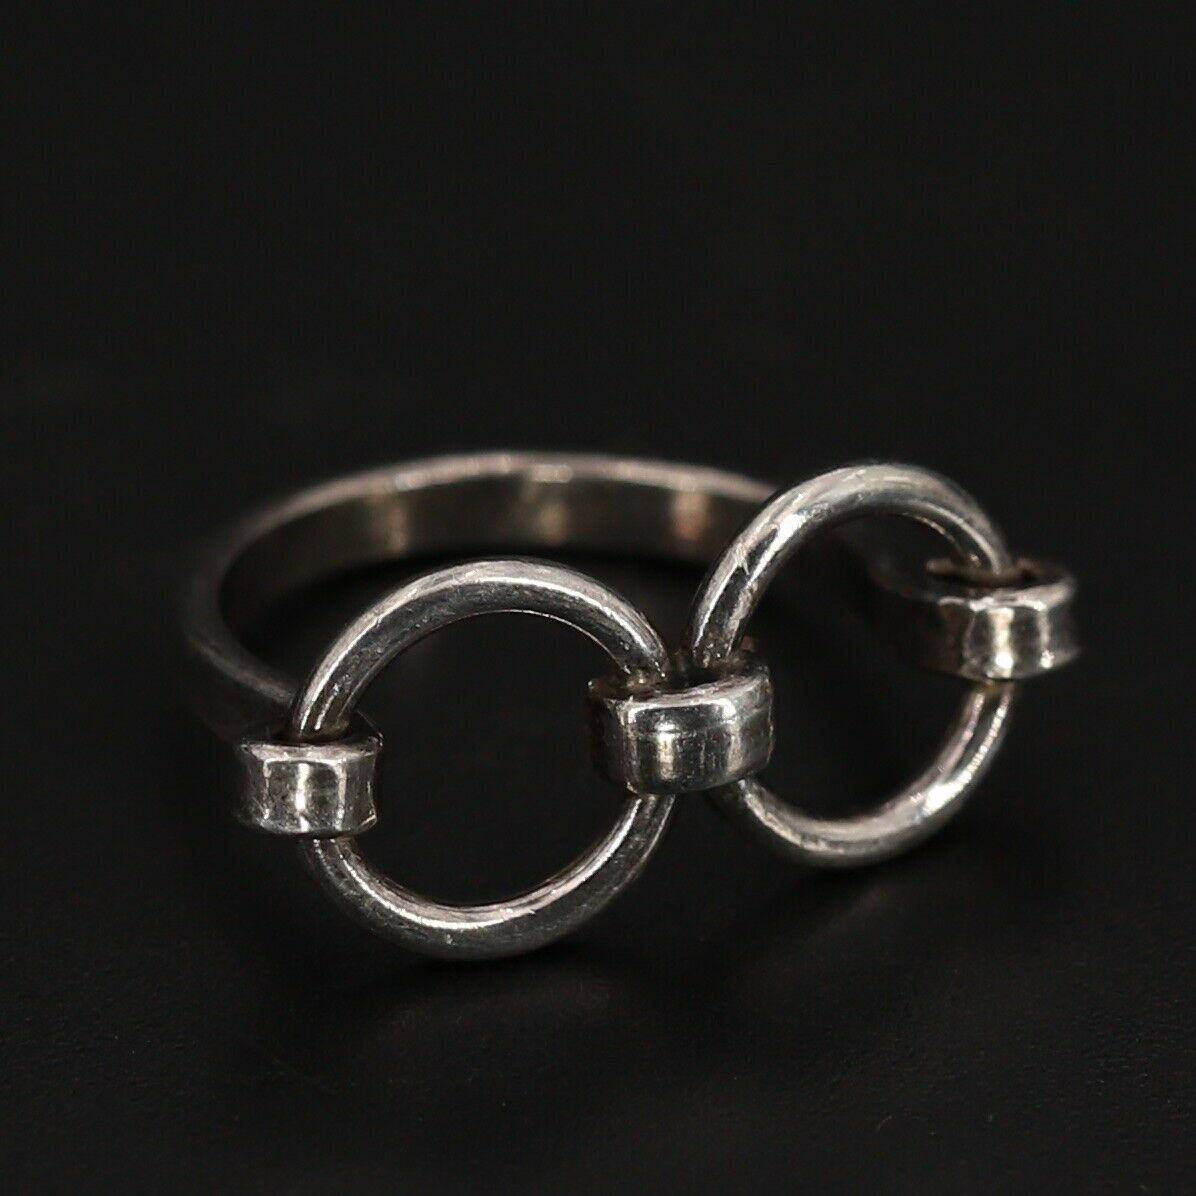 Vtg Sterling Silver - Modernist Open Rings Hoop Link Ring Size 5.5 - 2g